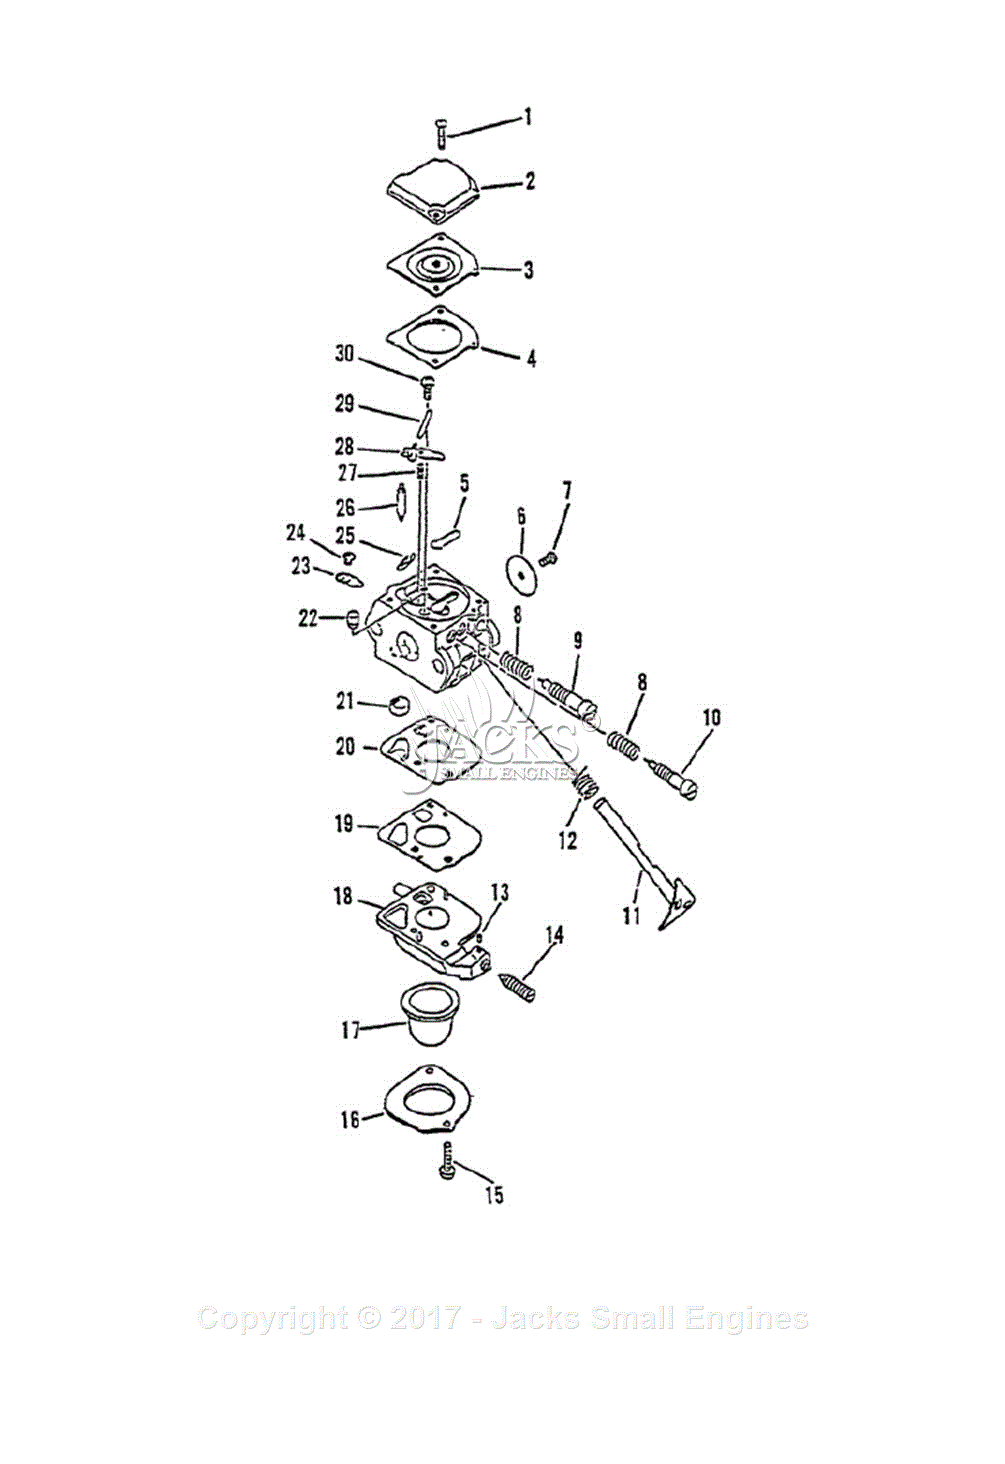 sourcing map Kit di ricostruzione carburatore Guarnizione Diaframma RB-52 per motori Echo PB-1000 PB-1010 ES1000 ZAMA C1Q-P18 C1Q-P22 C1Q-P24 C1Q-P26 C1U-K26 Carb 